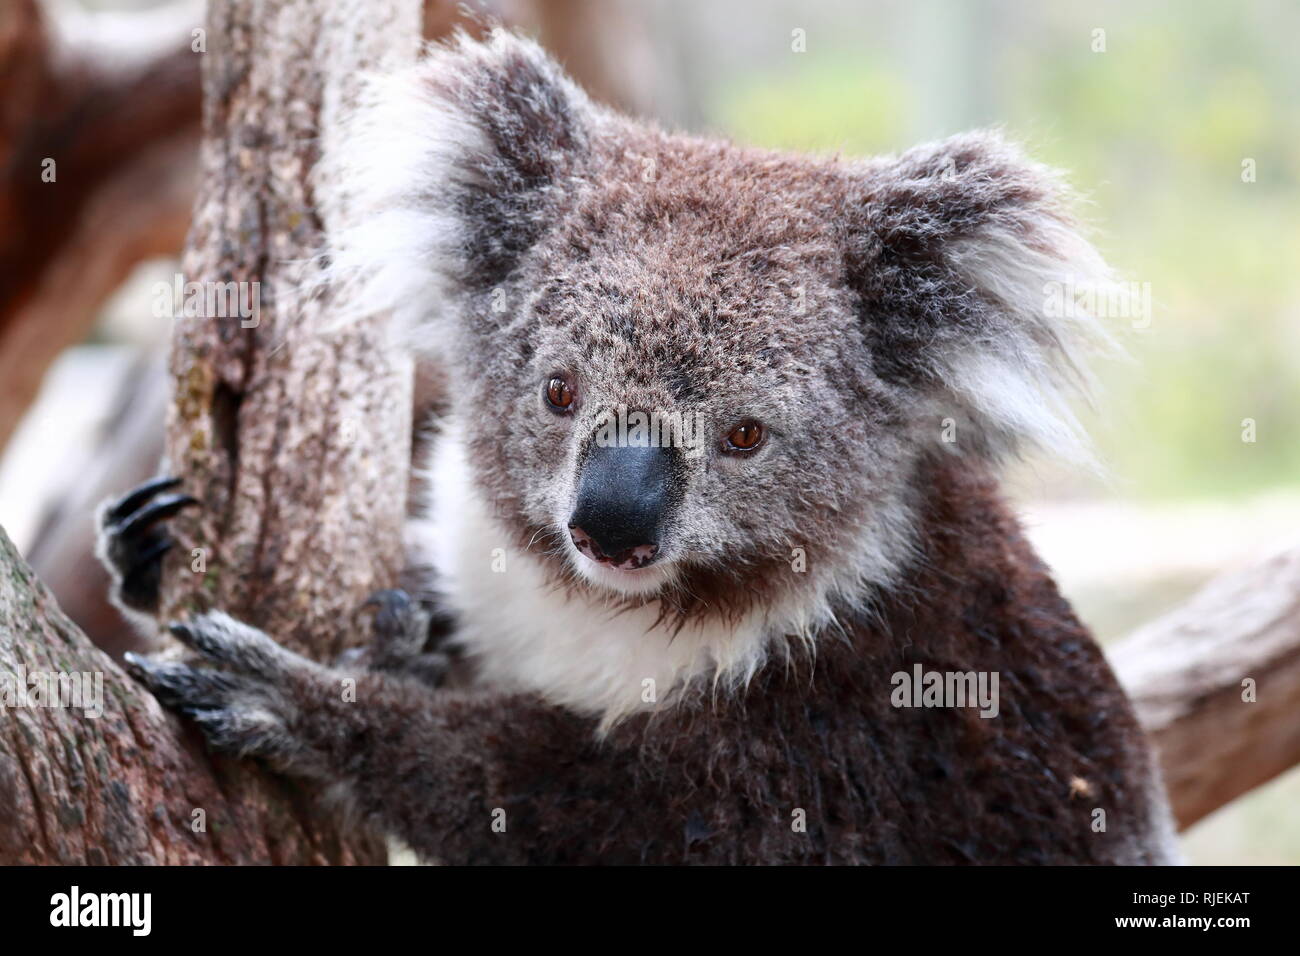 Koala portrait taken in South Australia Stock Photo